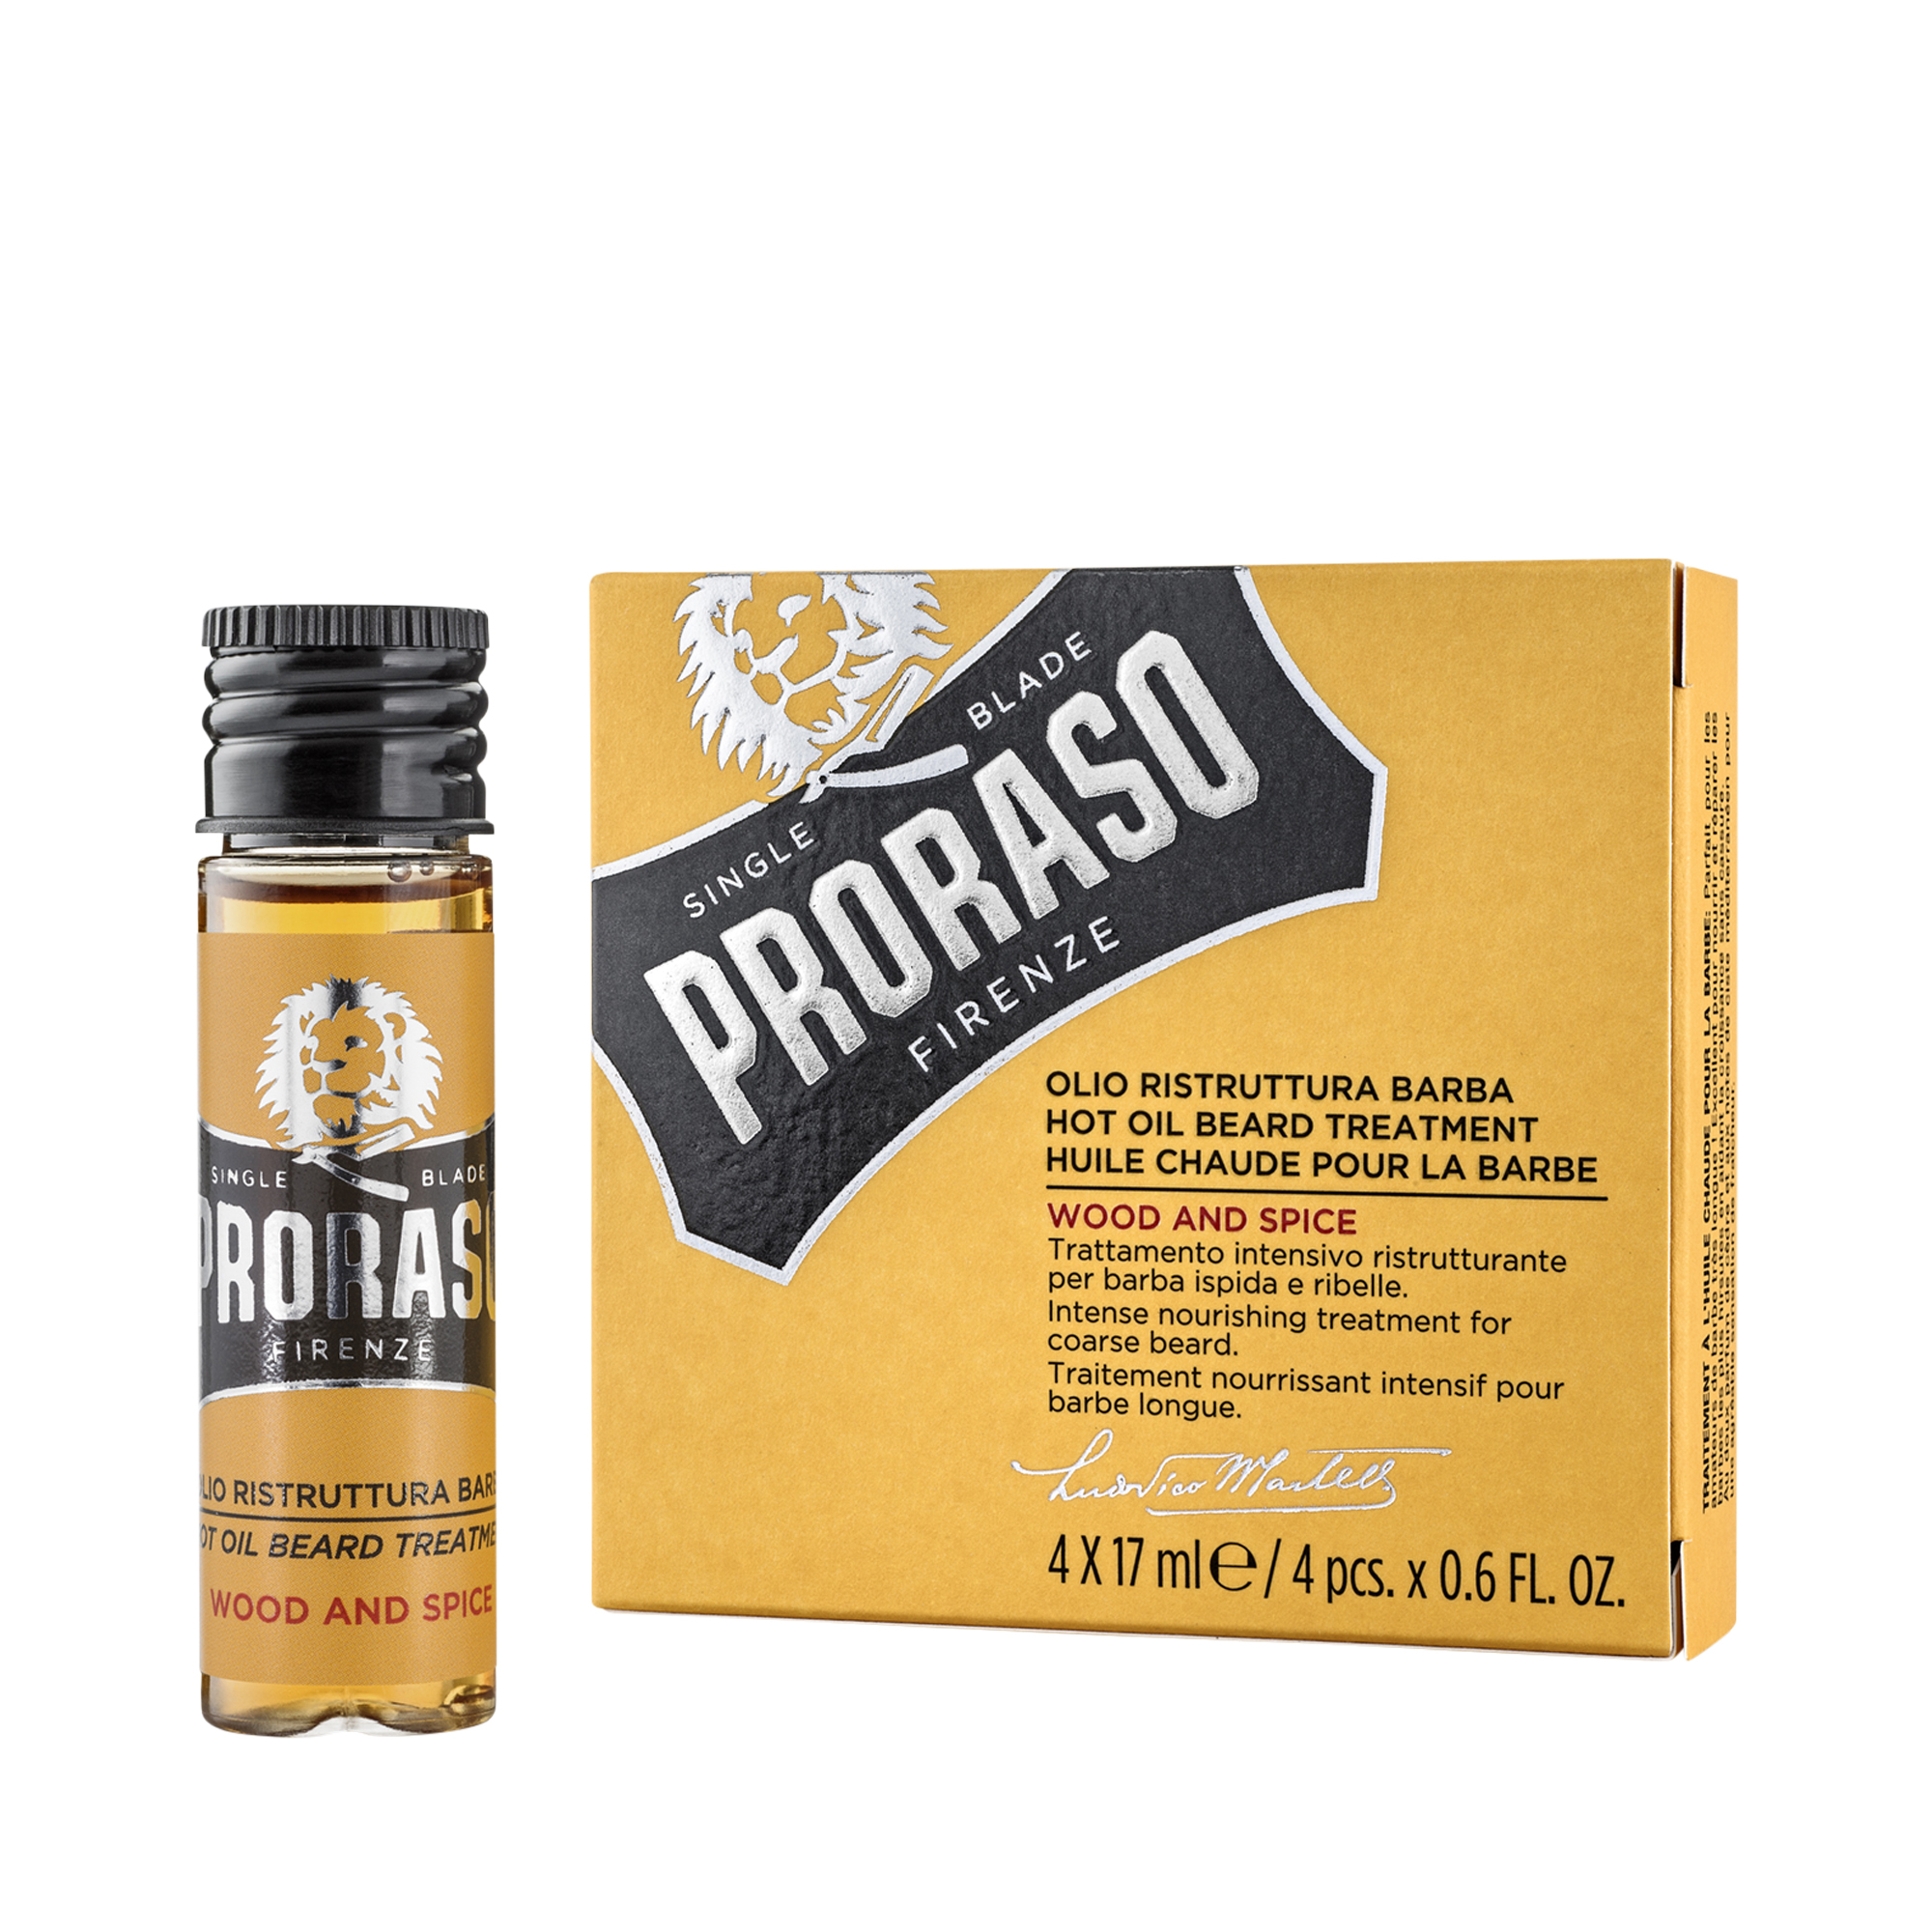 Proraso -  Heißes Bart Öl - Wood & Spice - SINGLE BLADE